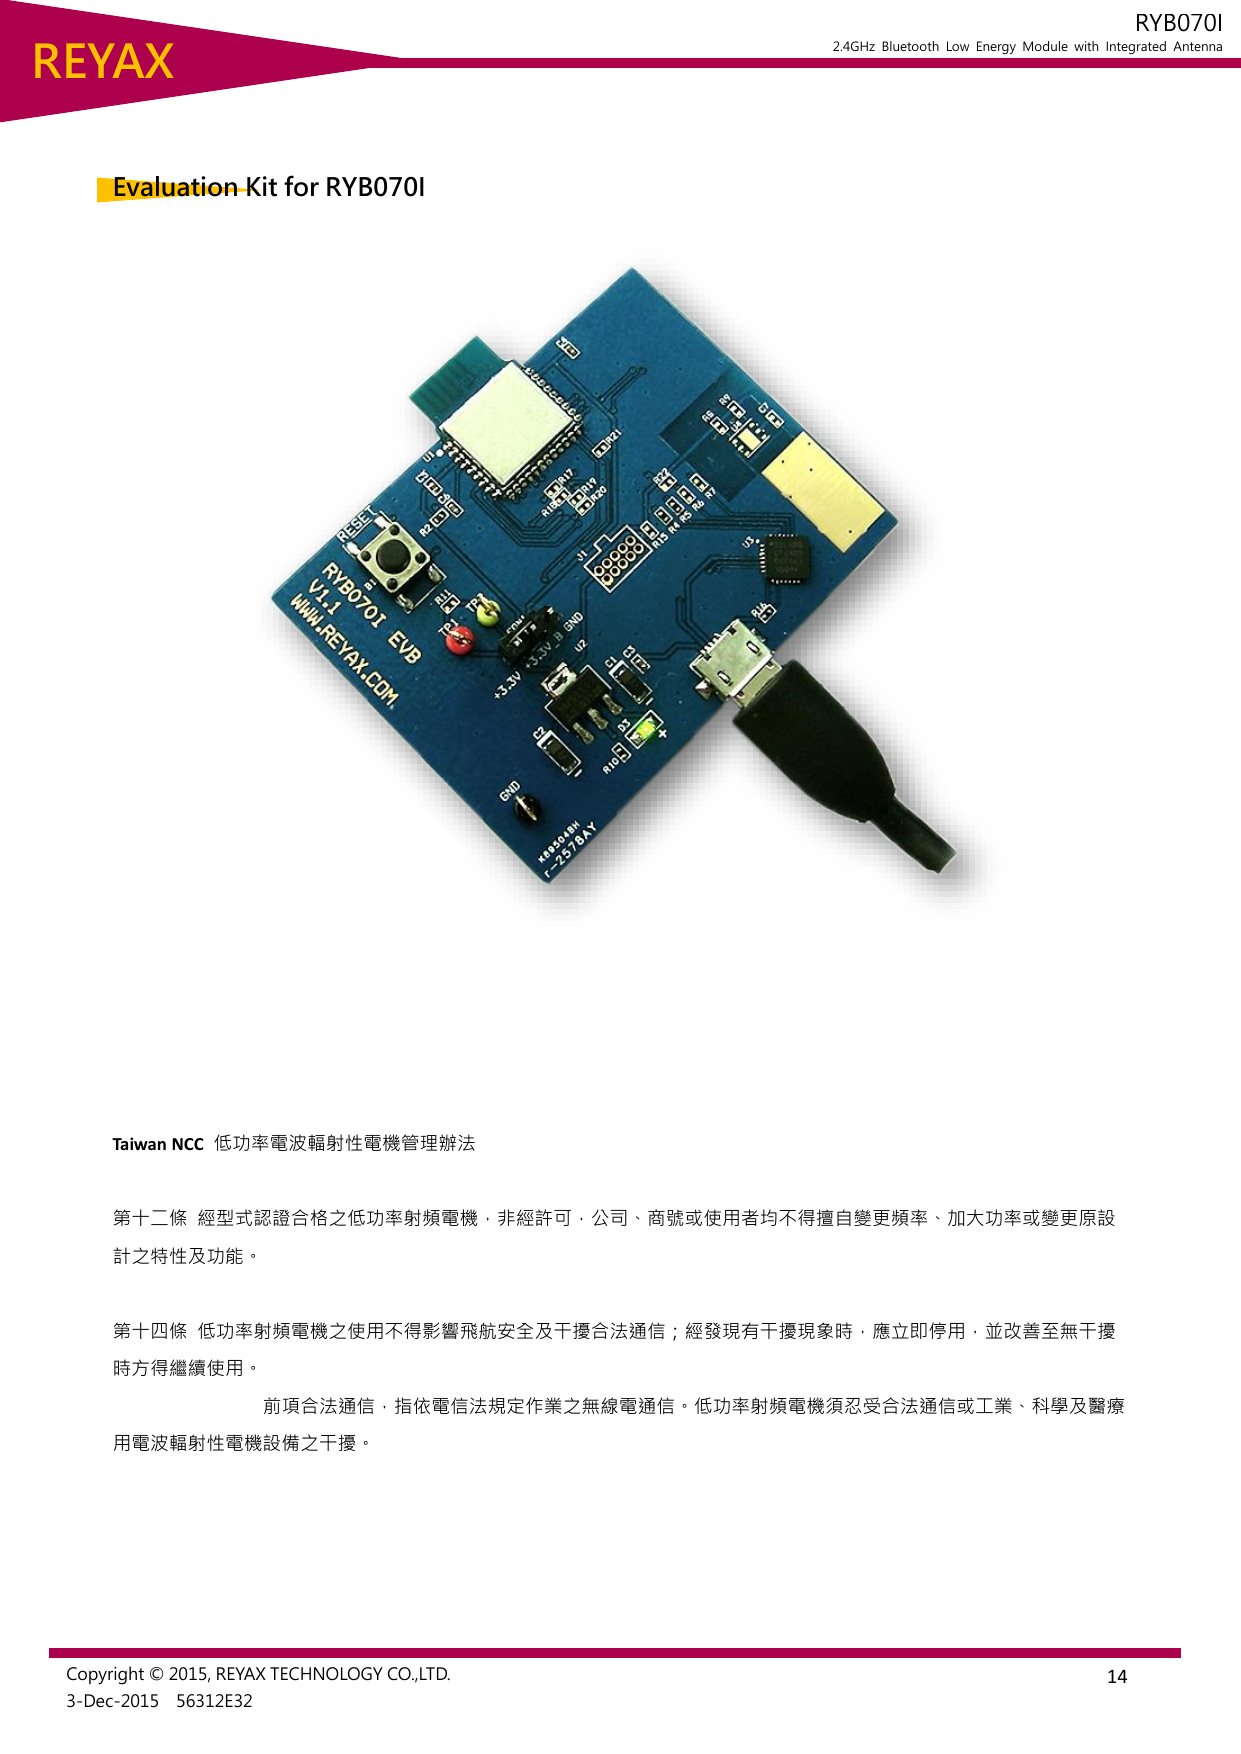  14 REYAX RYB070I 2.4GHz  Bluetooth  Low  Energy  Module  with  Integrated  Antenna  Copyright © 2015, REYAX TECHNOLOGY CO.,LTD. 3-Dec-2015    56312E32   Evaluation Kit for RYB070I       Taiwan NCC  低功率電波輻射性電機管理辦法  第十二條 經型式認證合格之低功率射頻電機，非經許可，公司、商號或使用者均不得擅自變更頻率、加大功率或變更原設計之特性及功能。    第十四條 低功率射頻電機之使用不得影響飛航安全及干擾合法通信；經發現有干擾現象時，應立即停用，並改善至無干擾時方得繼續使用。                                 前項合法通信，指依電信法規定作業之無線電通信。低功率射頻電機須忍受合法通信或工業、科學及醫療用電波輻射性電機設備之干擾。    